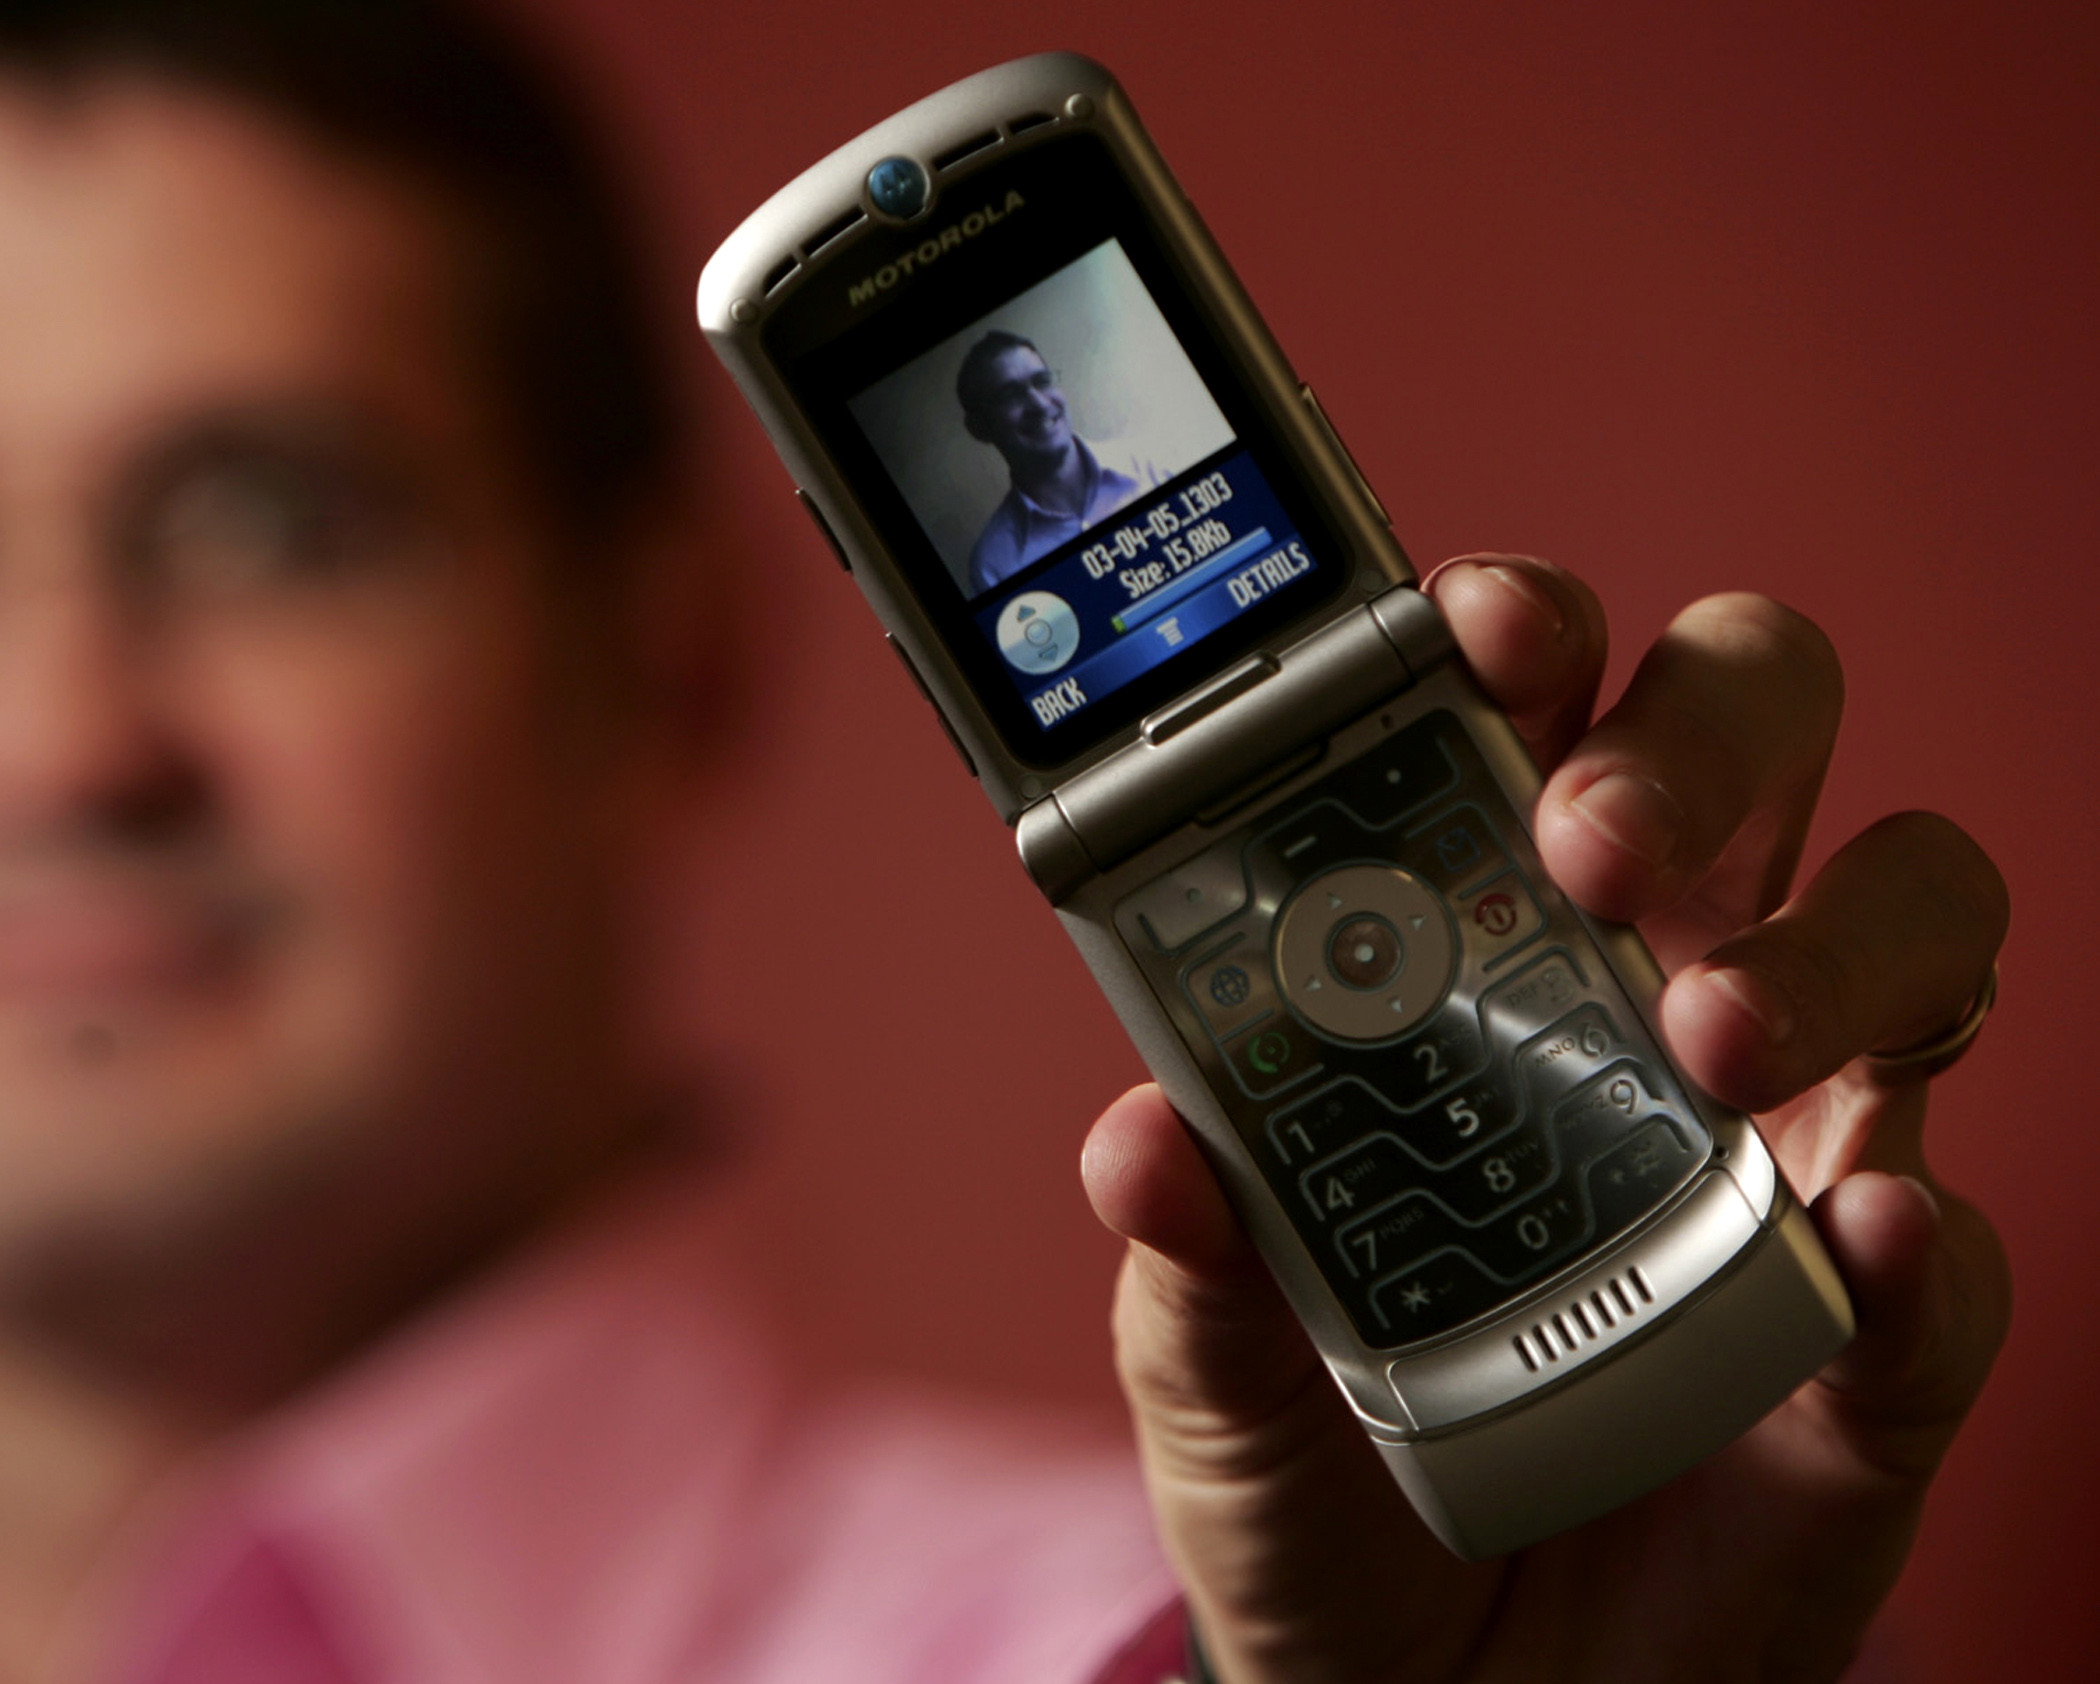   Motorola Razr nguyên bản ra mắt năm 2004